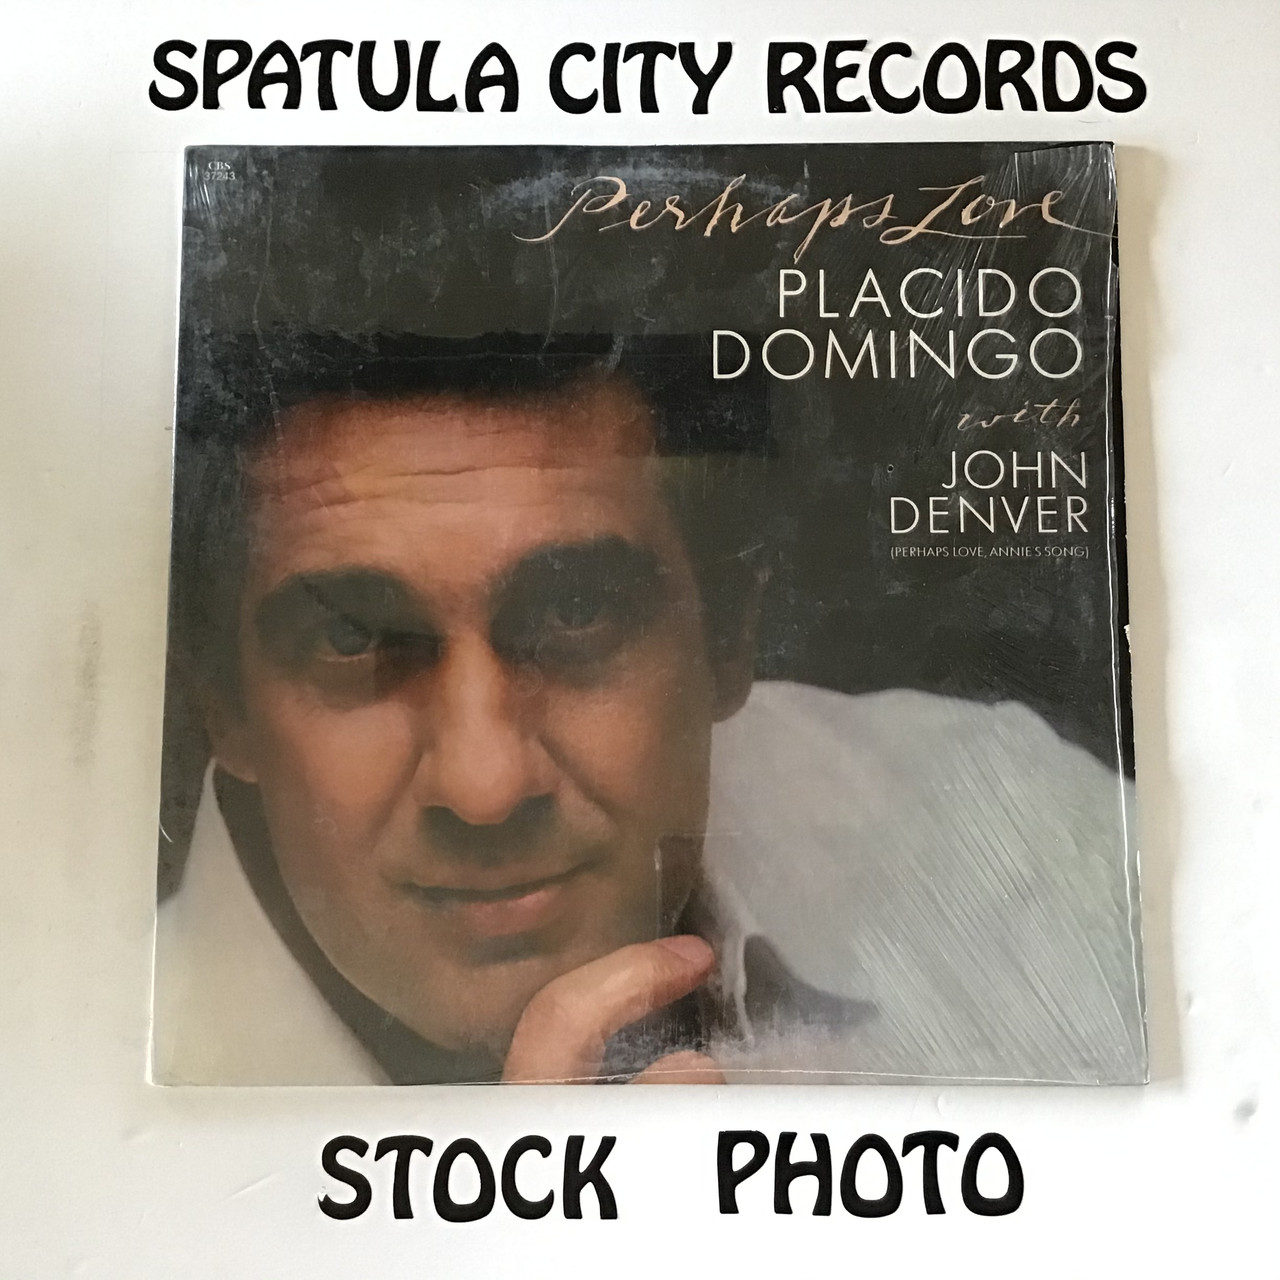 Placido Domingo with John Denver - Perhaps Love - vinyl record LP